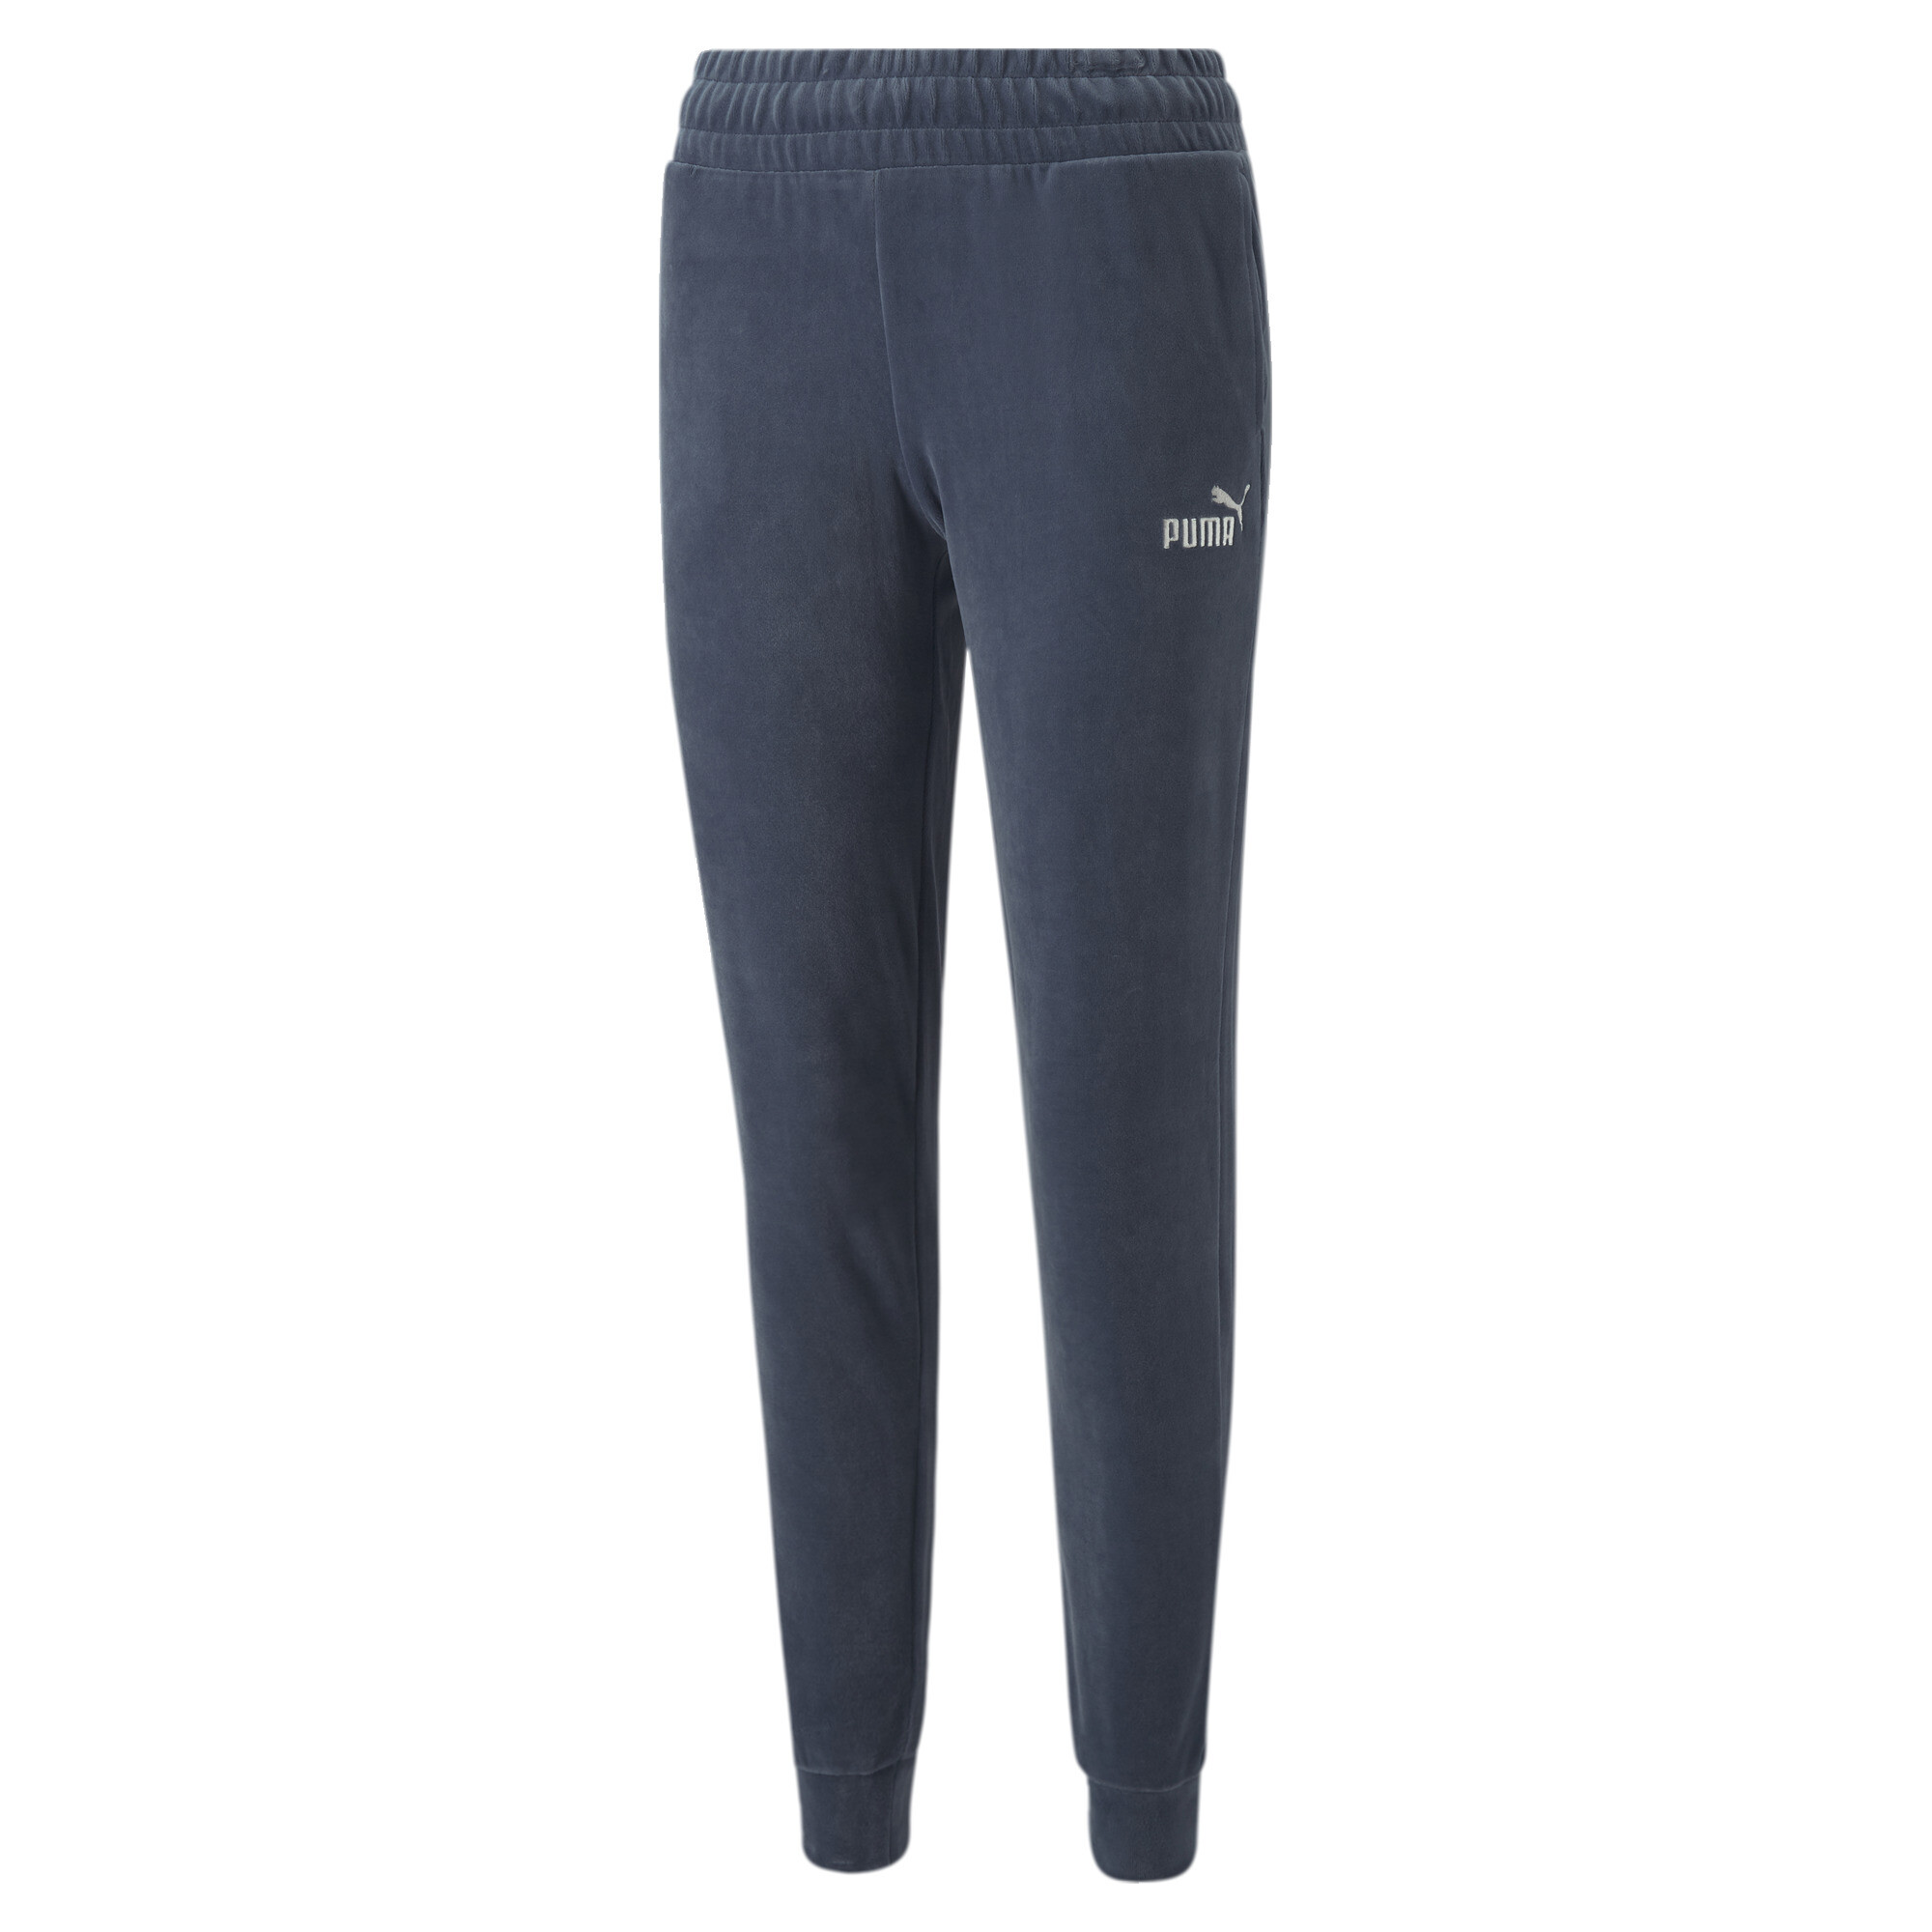 Puma Essentials Velour Pants Mens Grey Casual Athletic Bottoms 84996518 |  eBay